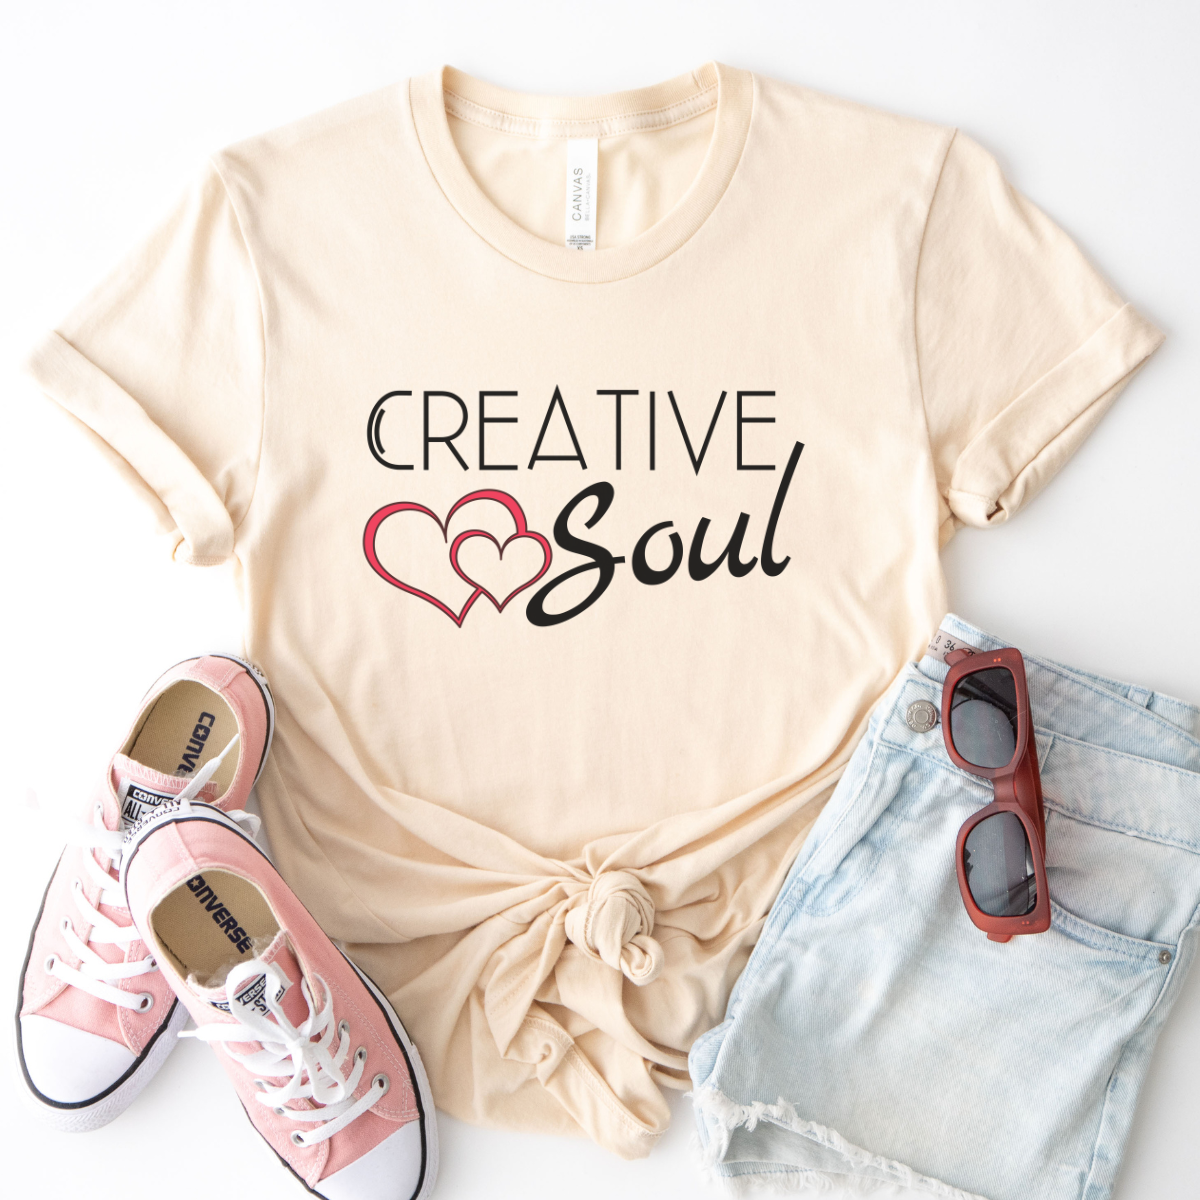 Creative Soul hearts Women's motivational inspirational Tshirt, crafter Tee, simple heart Soul shirt, positive gift for her, friend teen